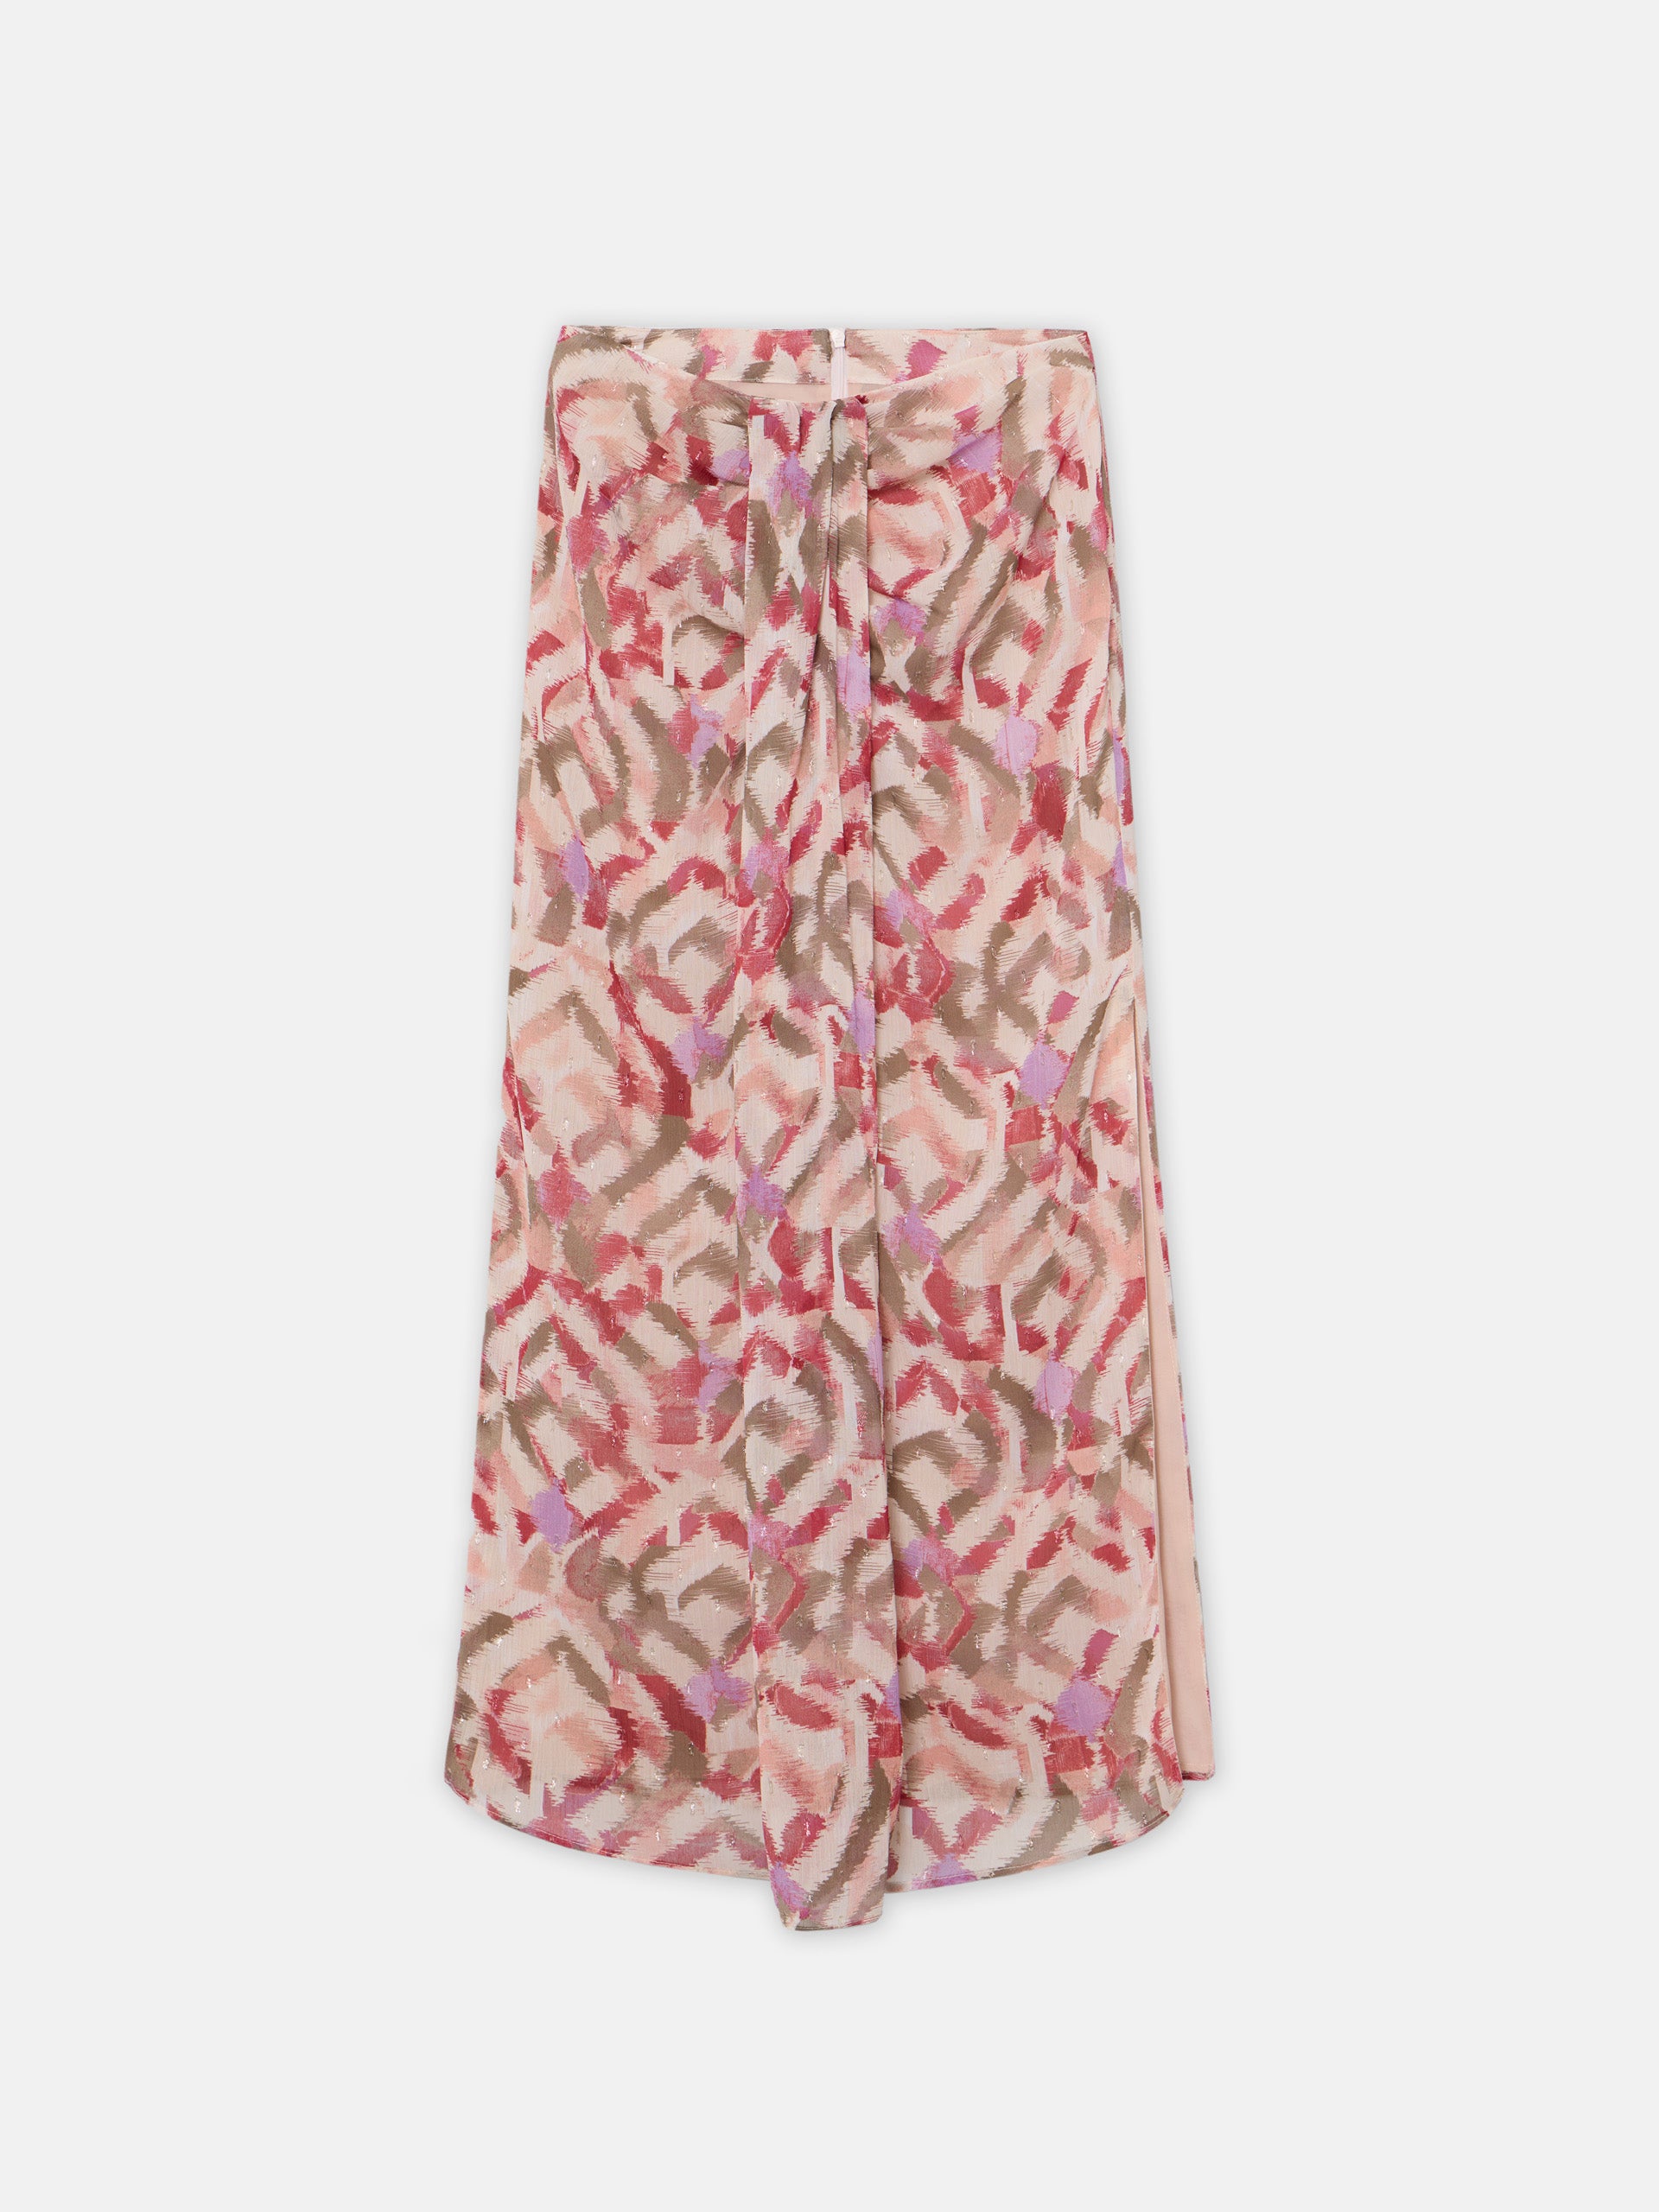 Unique printed women's skirt